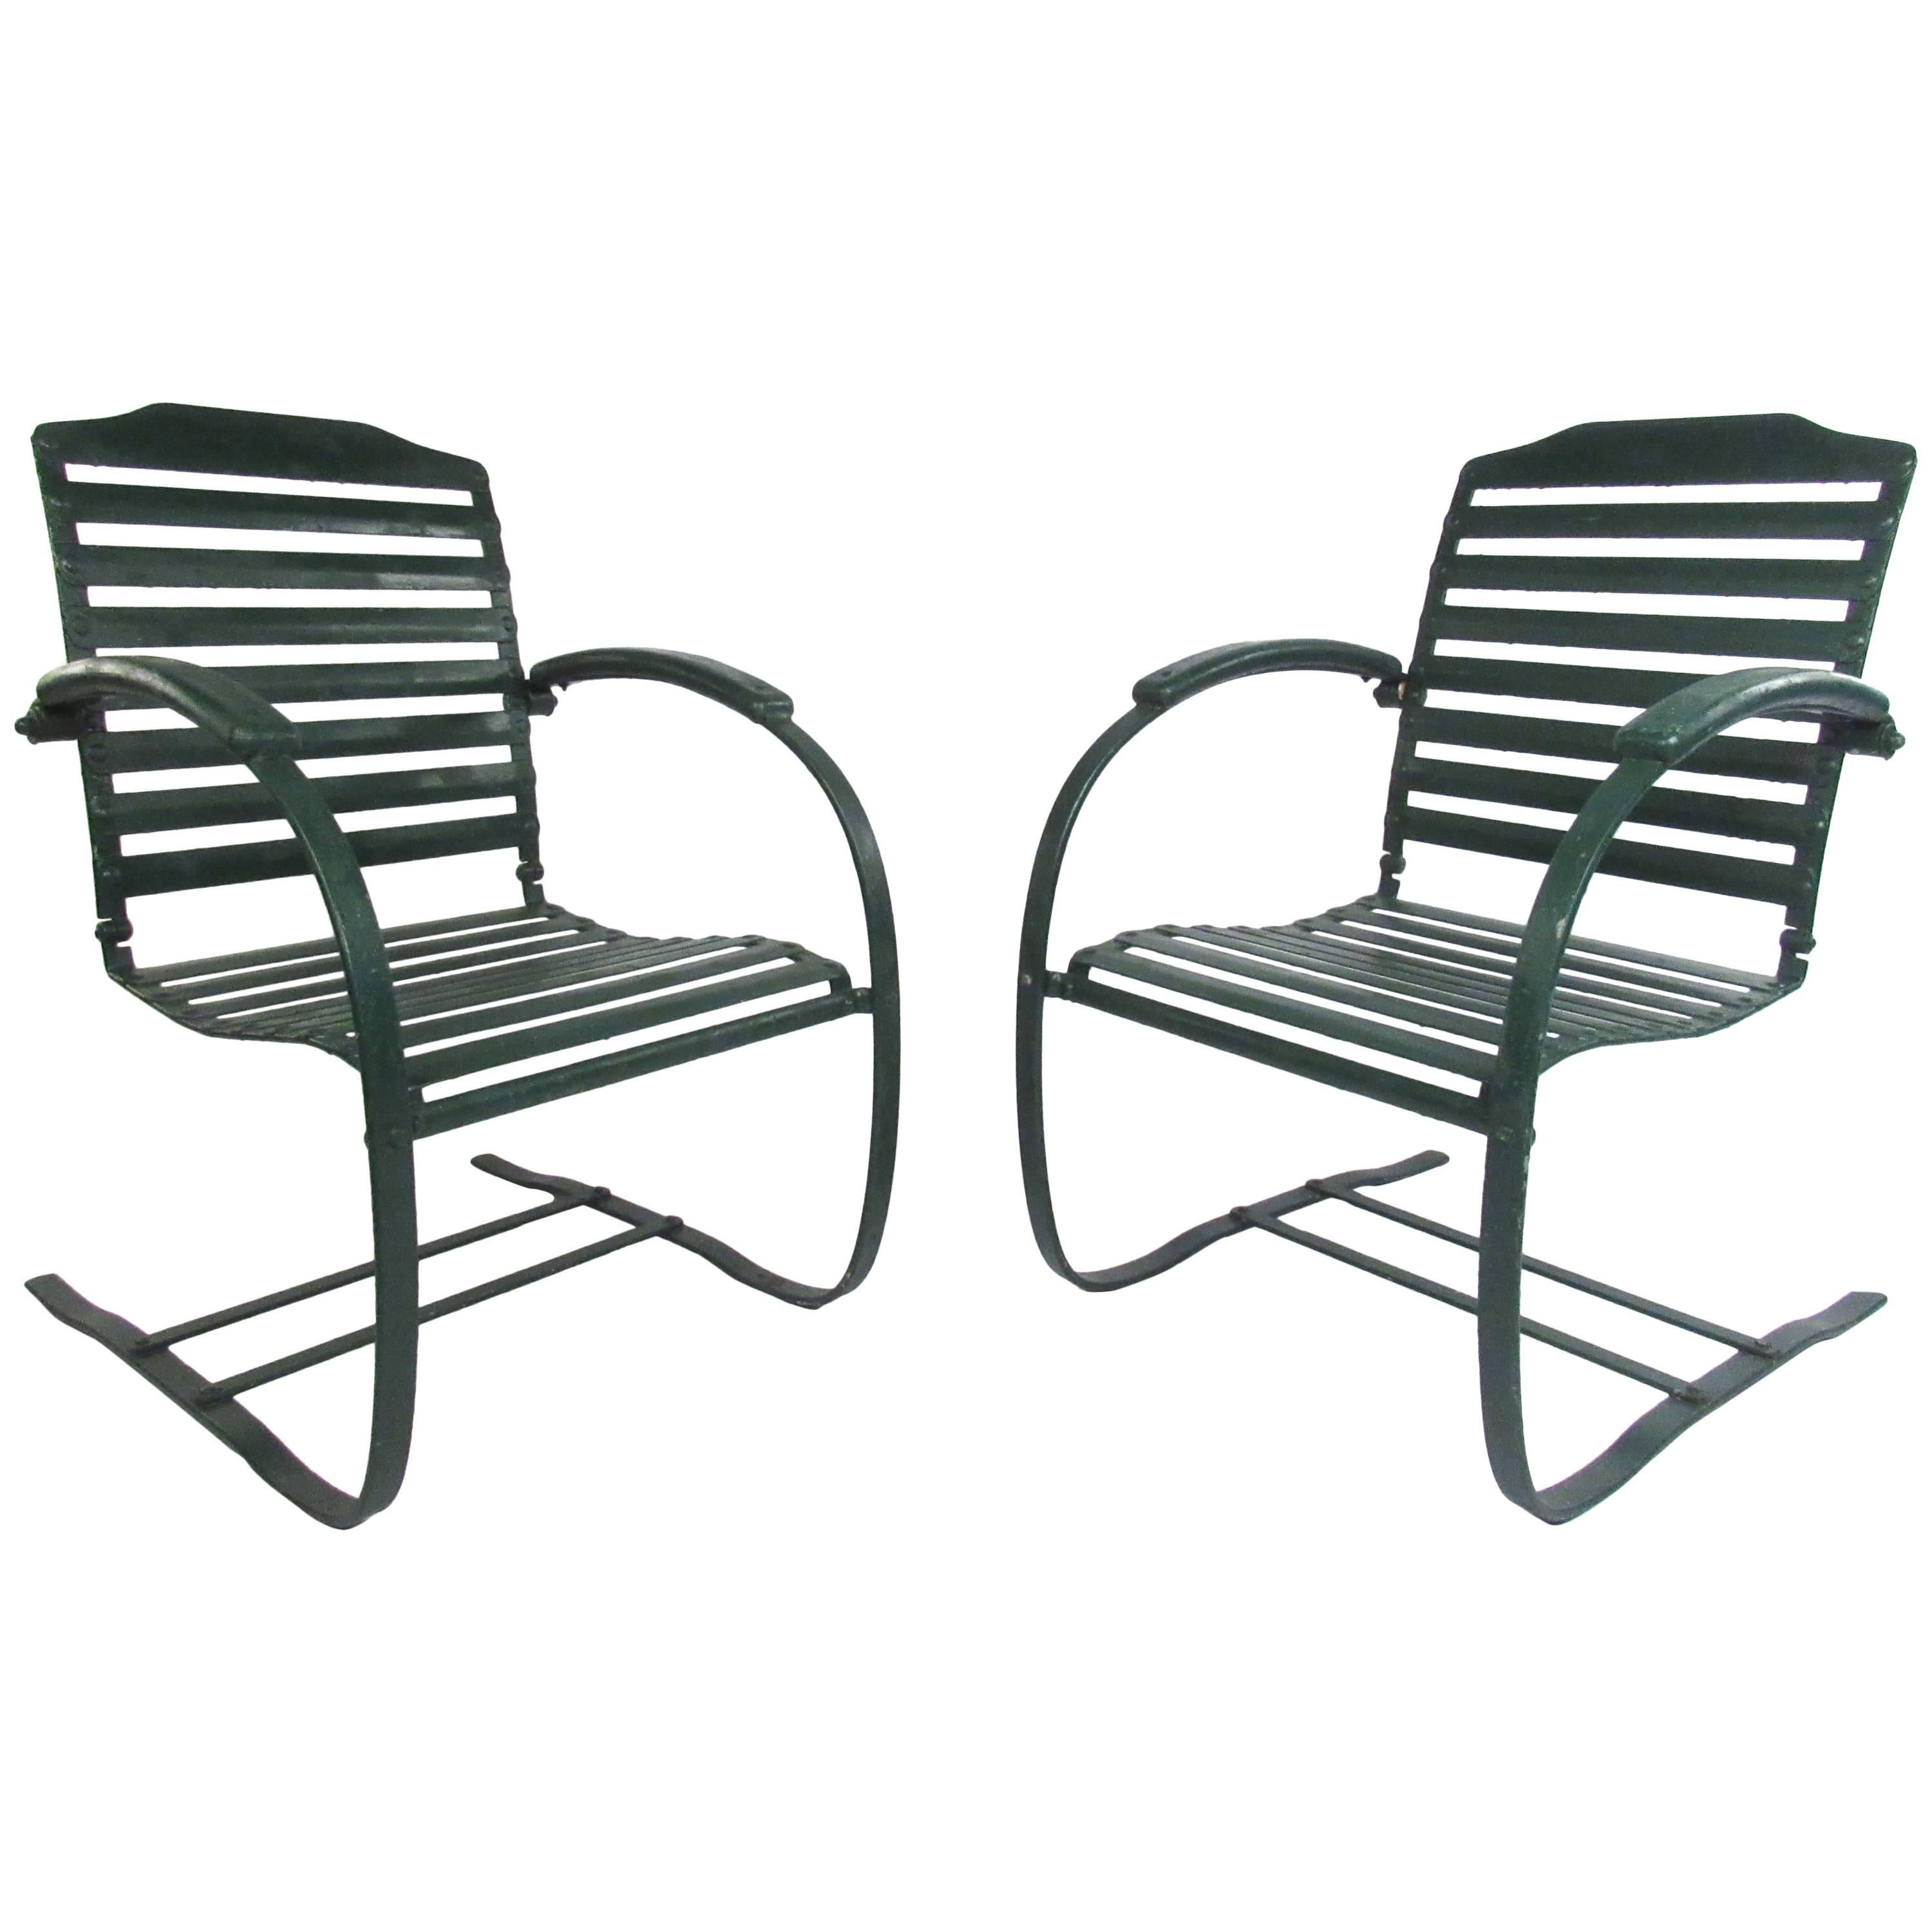 Pair of Vintage Metal Spring Chairs, Mid-Century Patio Furniture